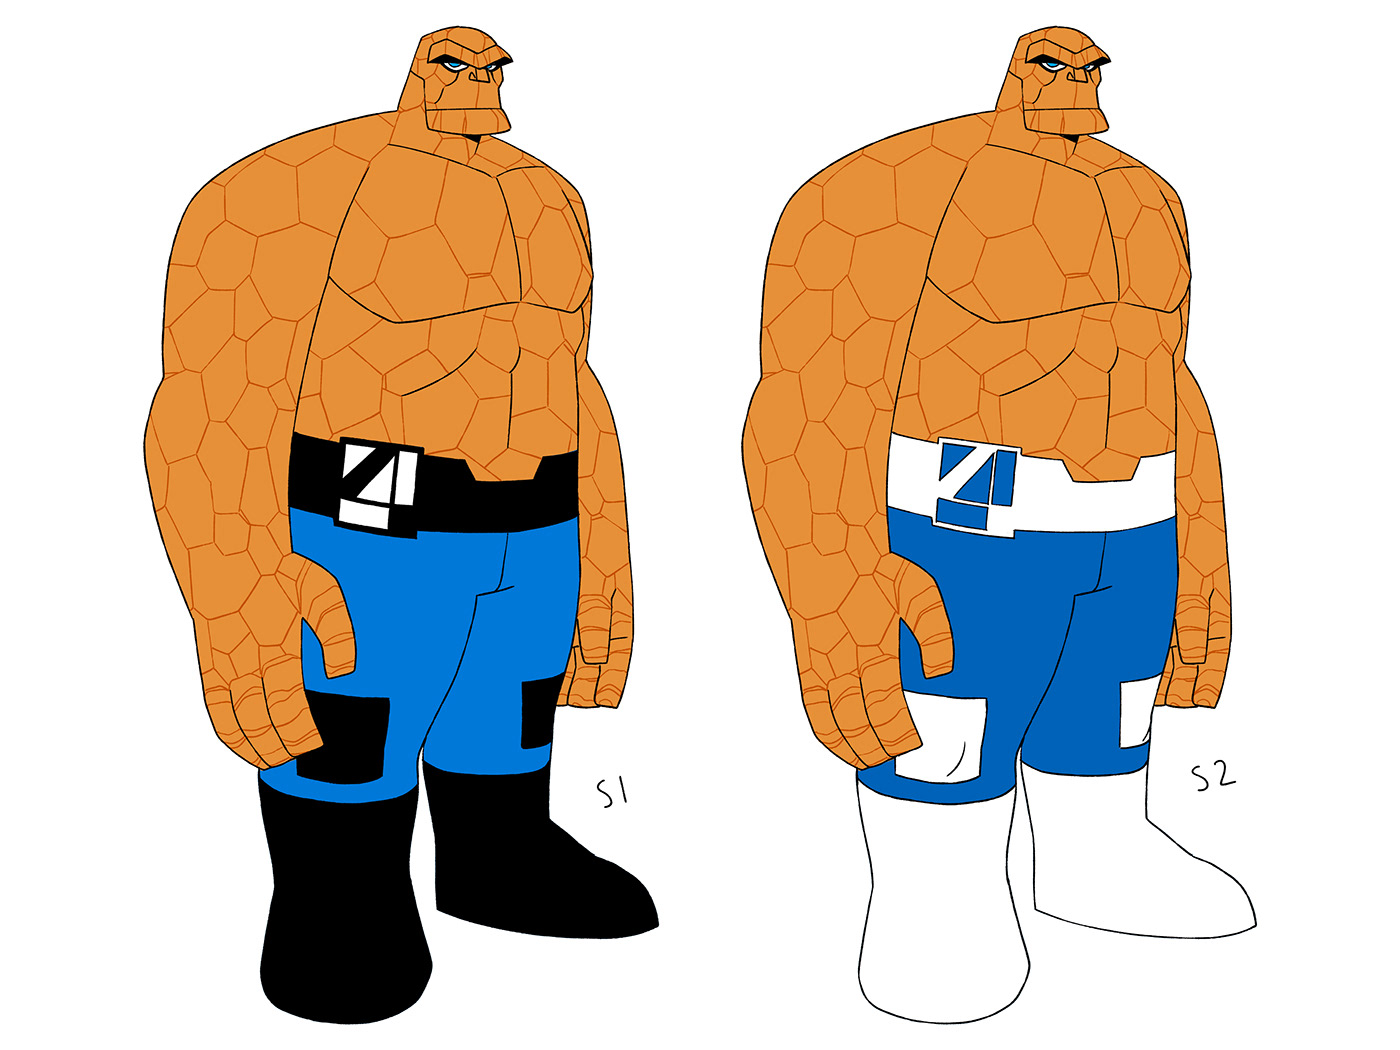 Character design  concept Fantastic Four marvel quarteto fantástico